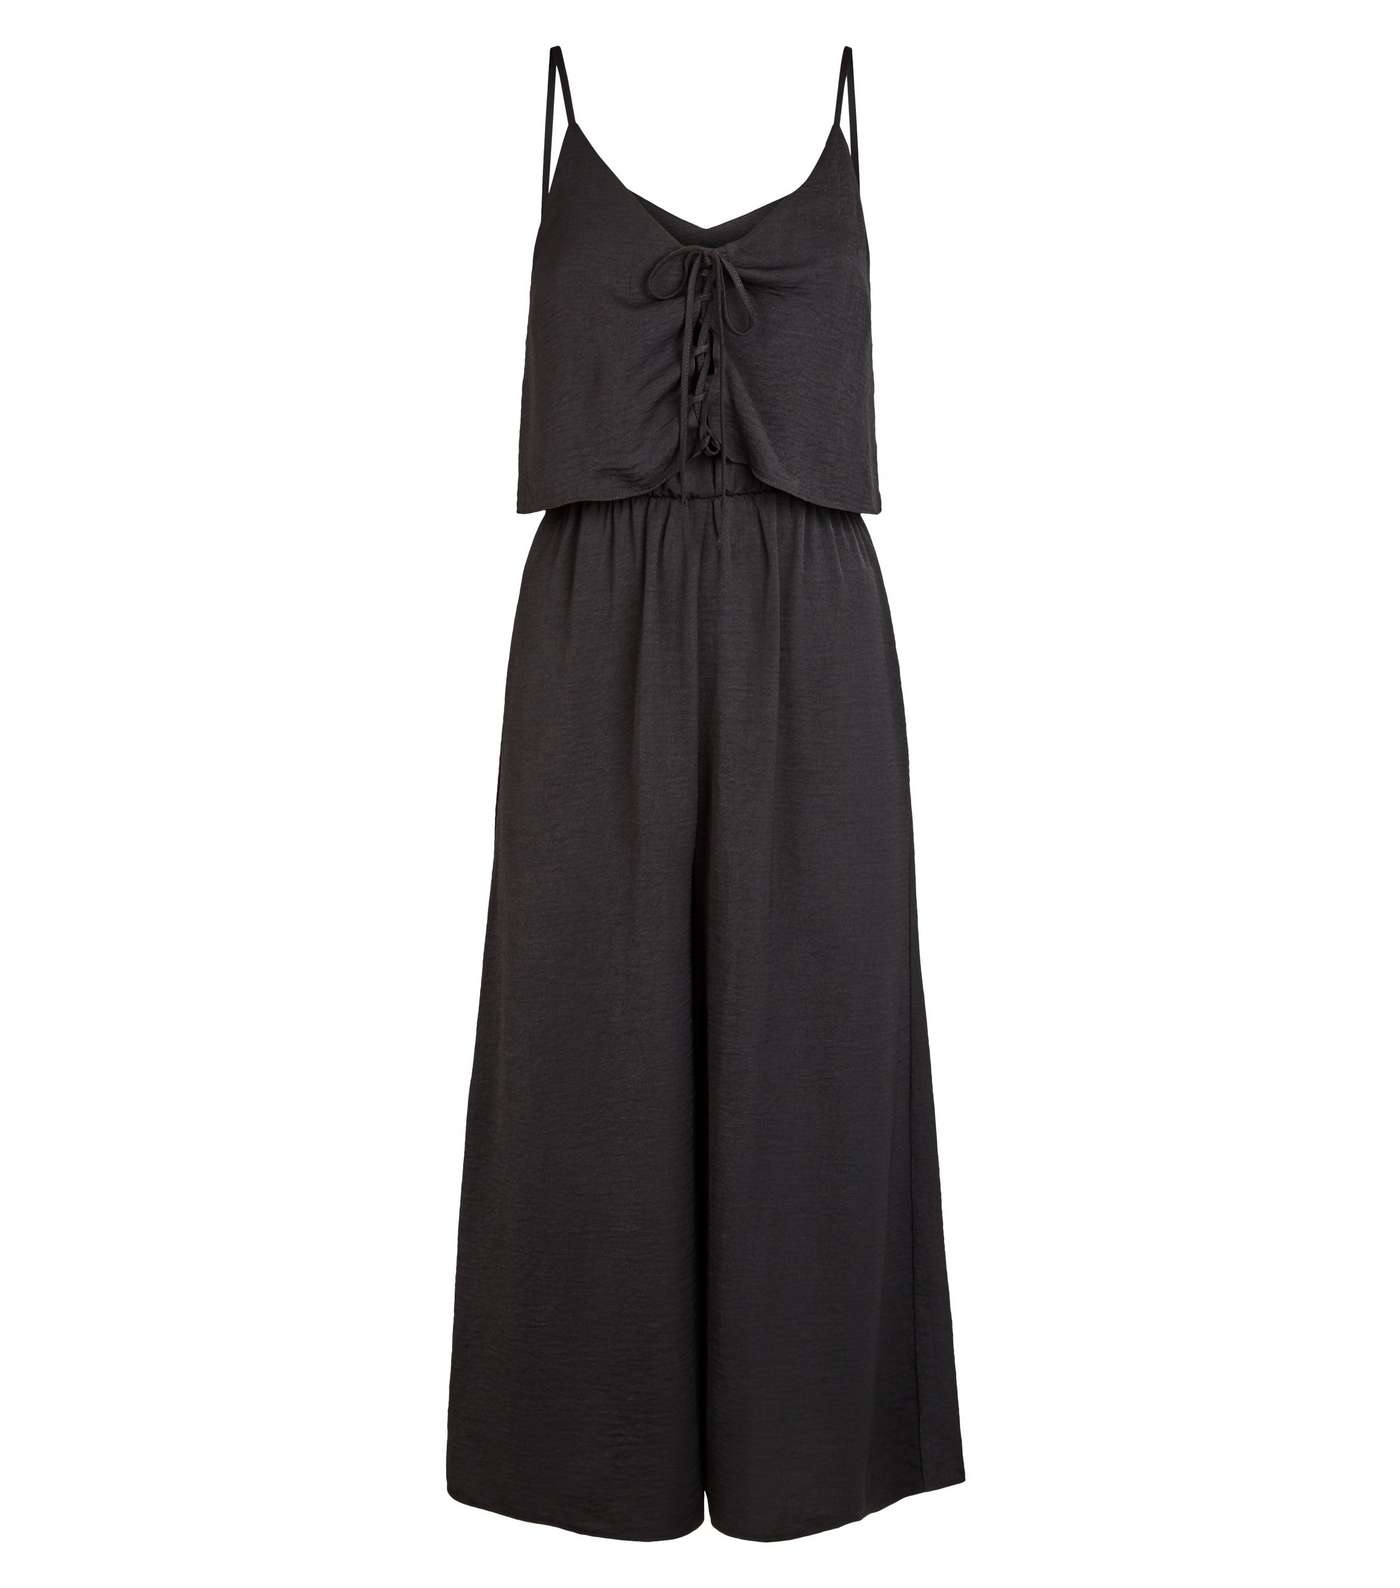 Black Lace Up Layered Culotte Jumpsuit Image 4